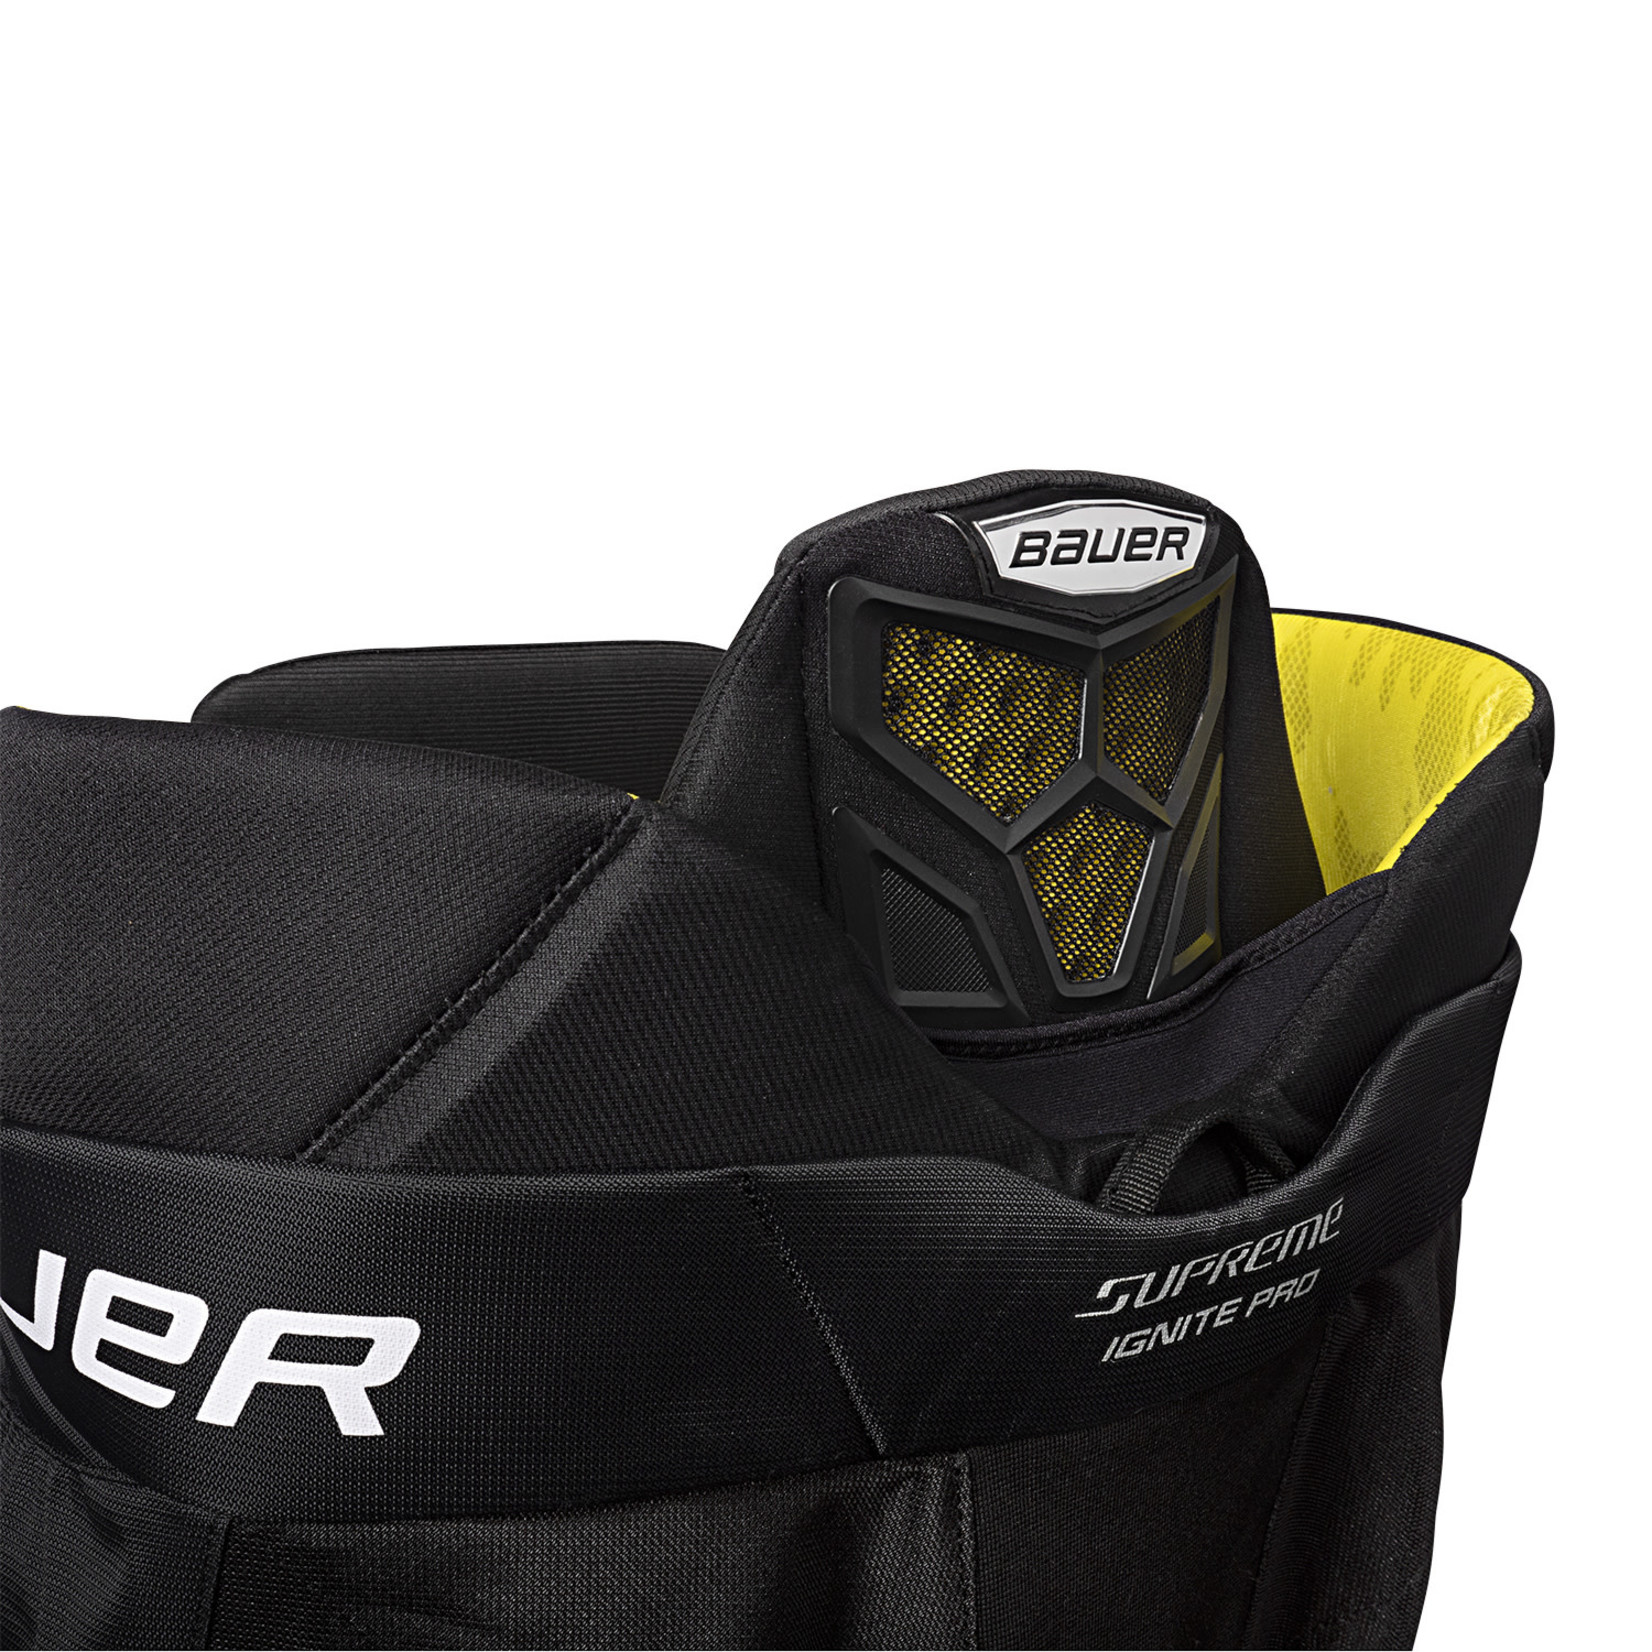 Bauer Bauer Hockey Pants, Supreme Ignite Pro, Junior